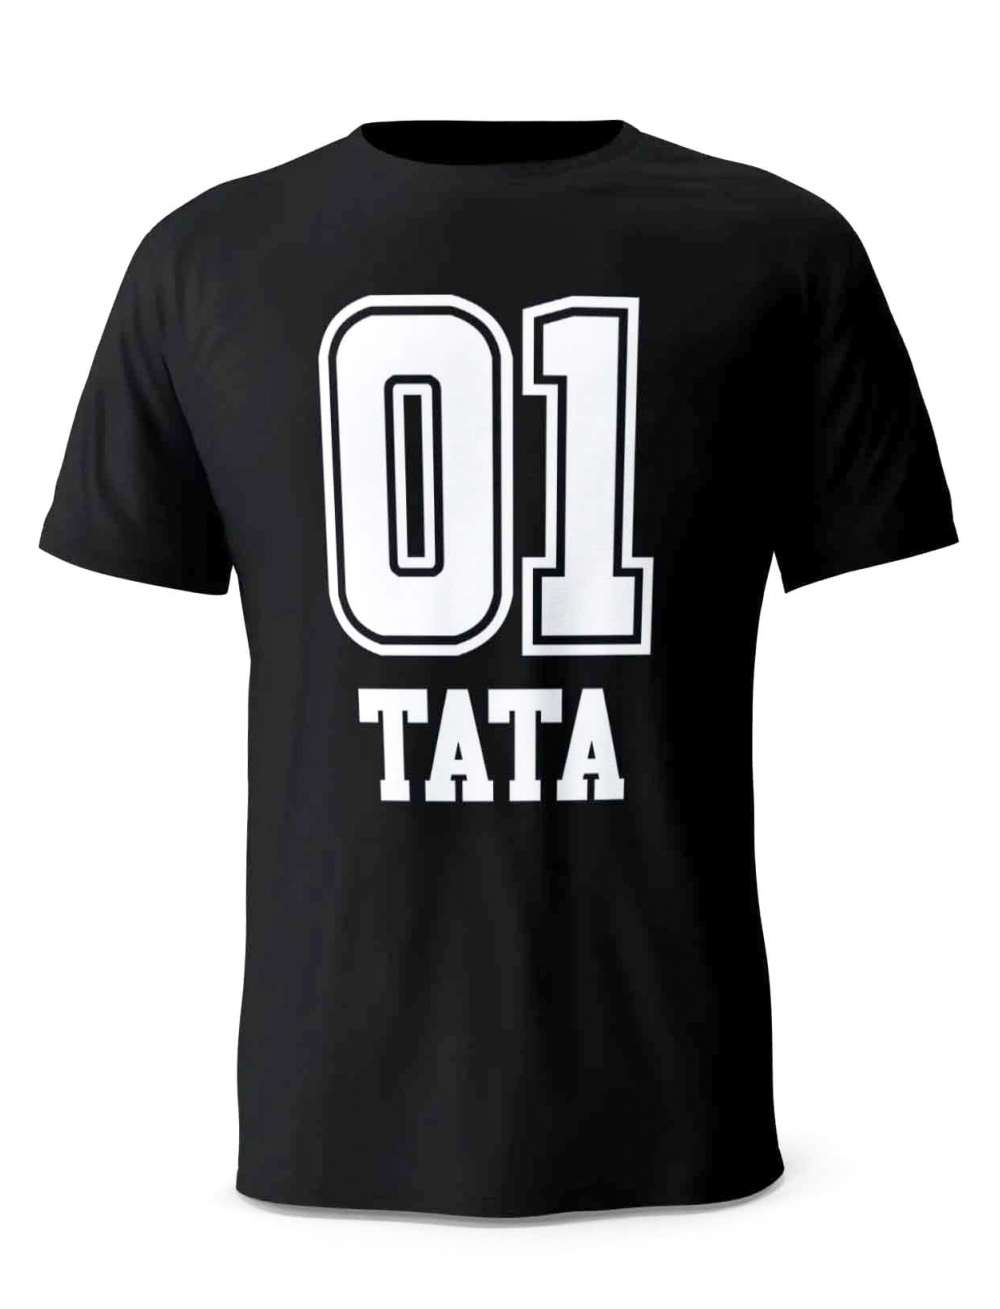 Koszulka Męska Tata 01, T-shirt dla Mężczyzny